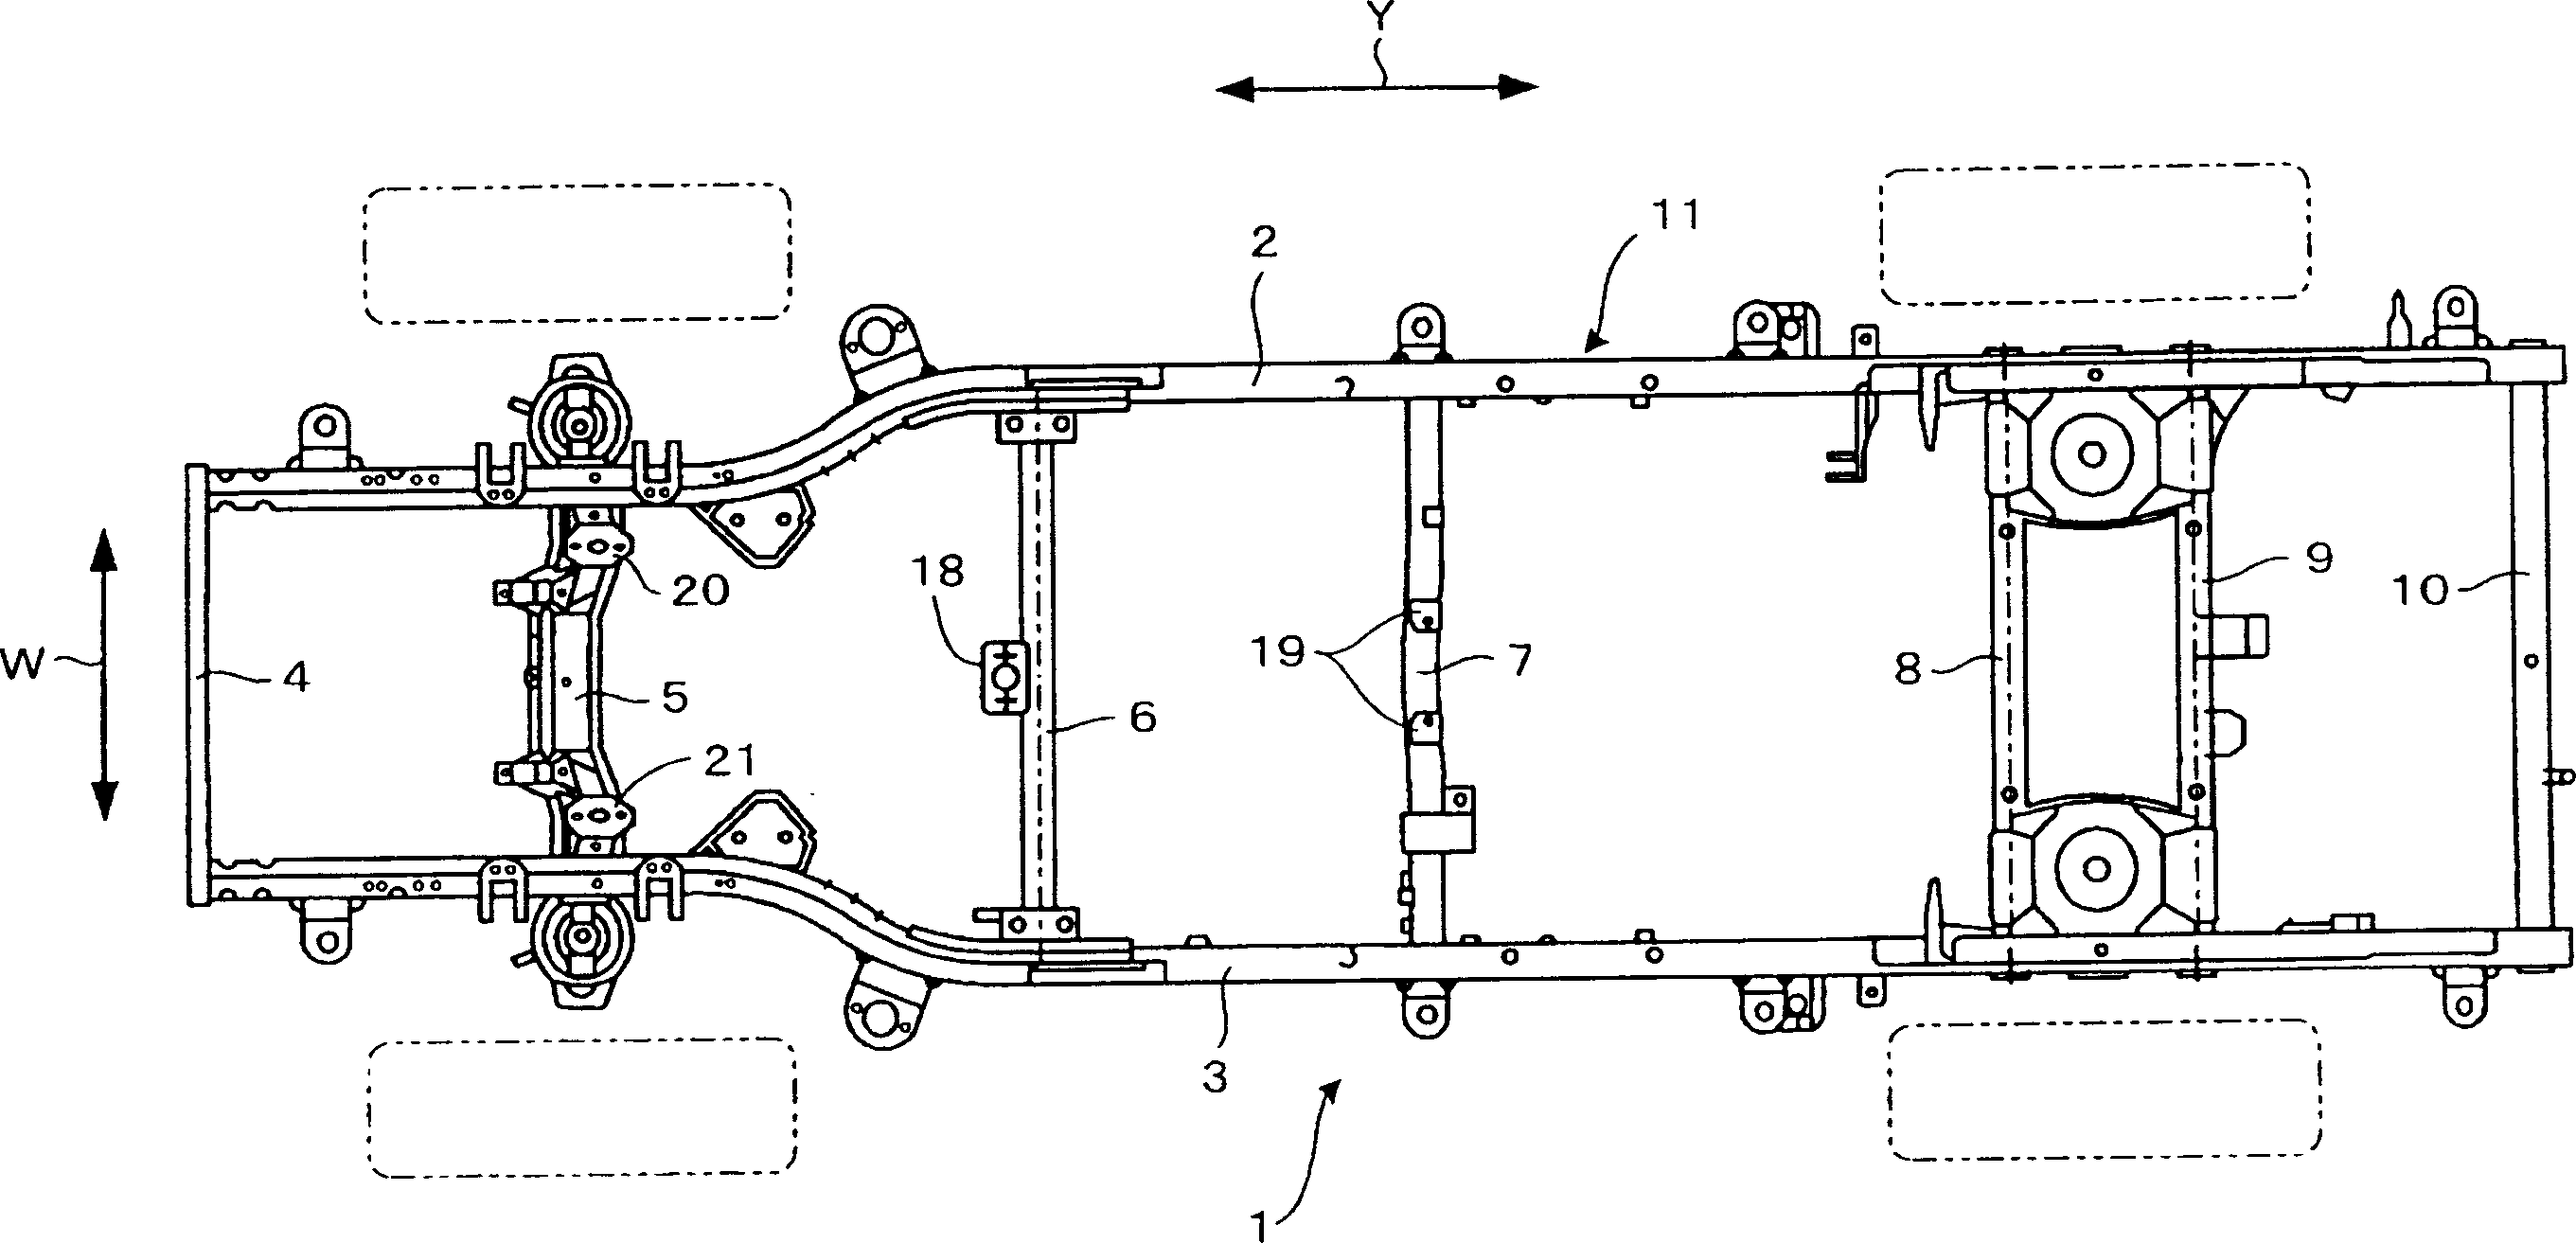 Engine rack structure